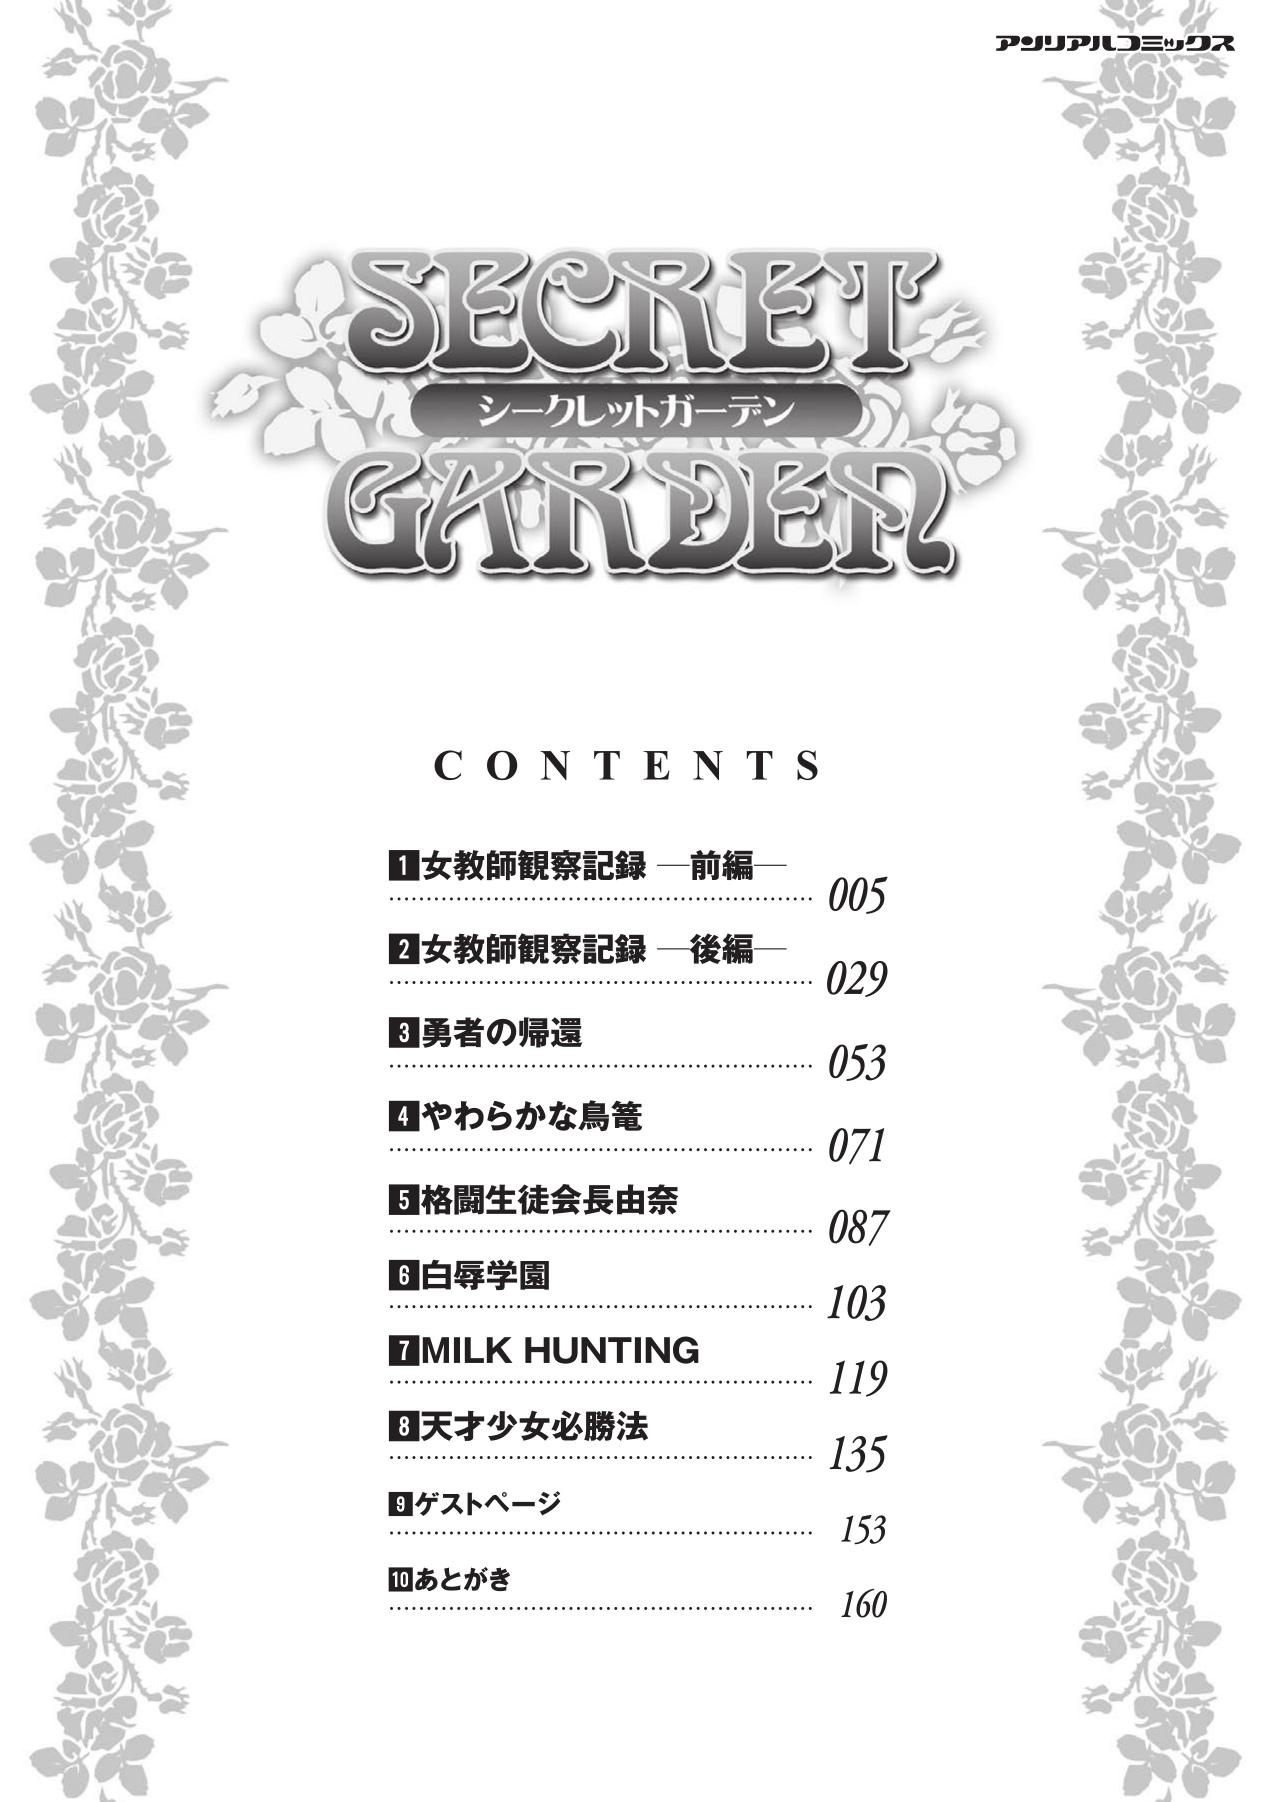 Secret Garden 3